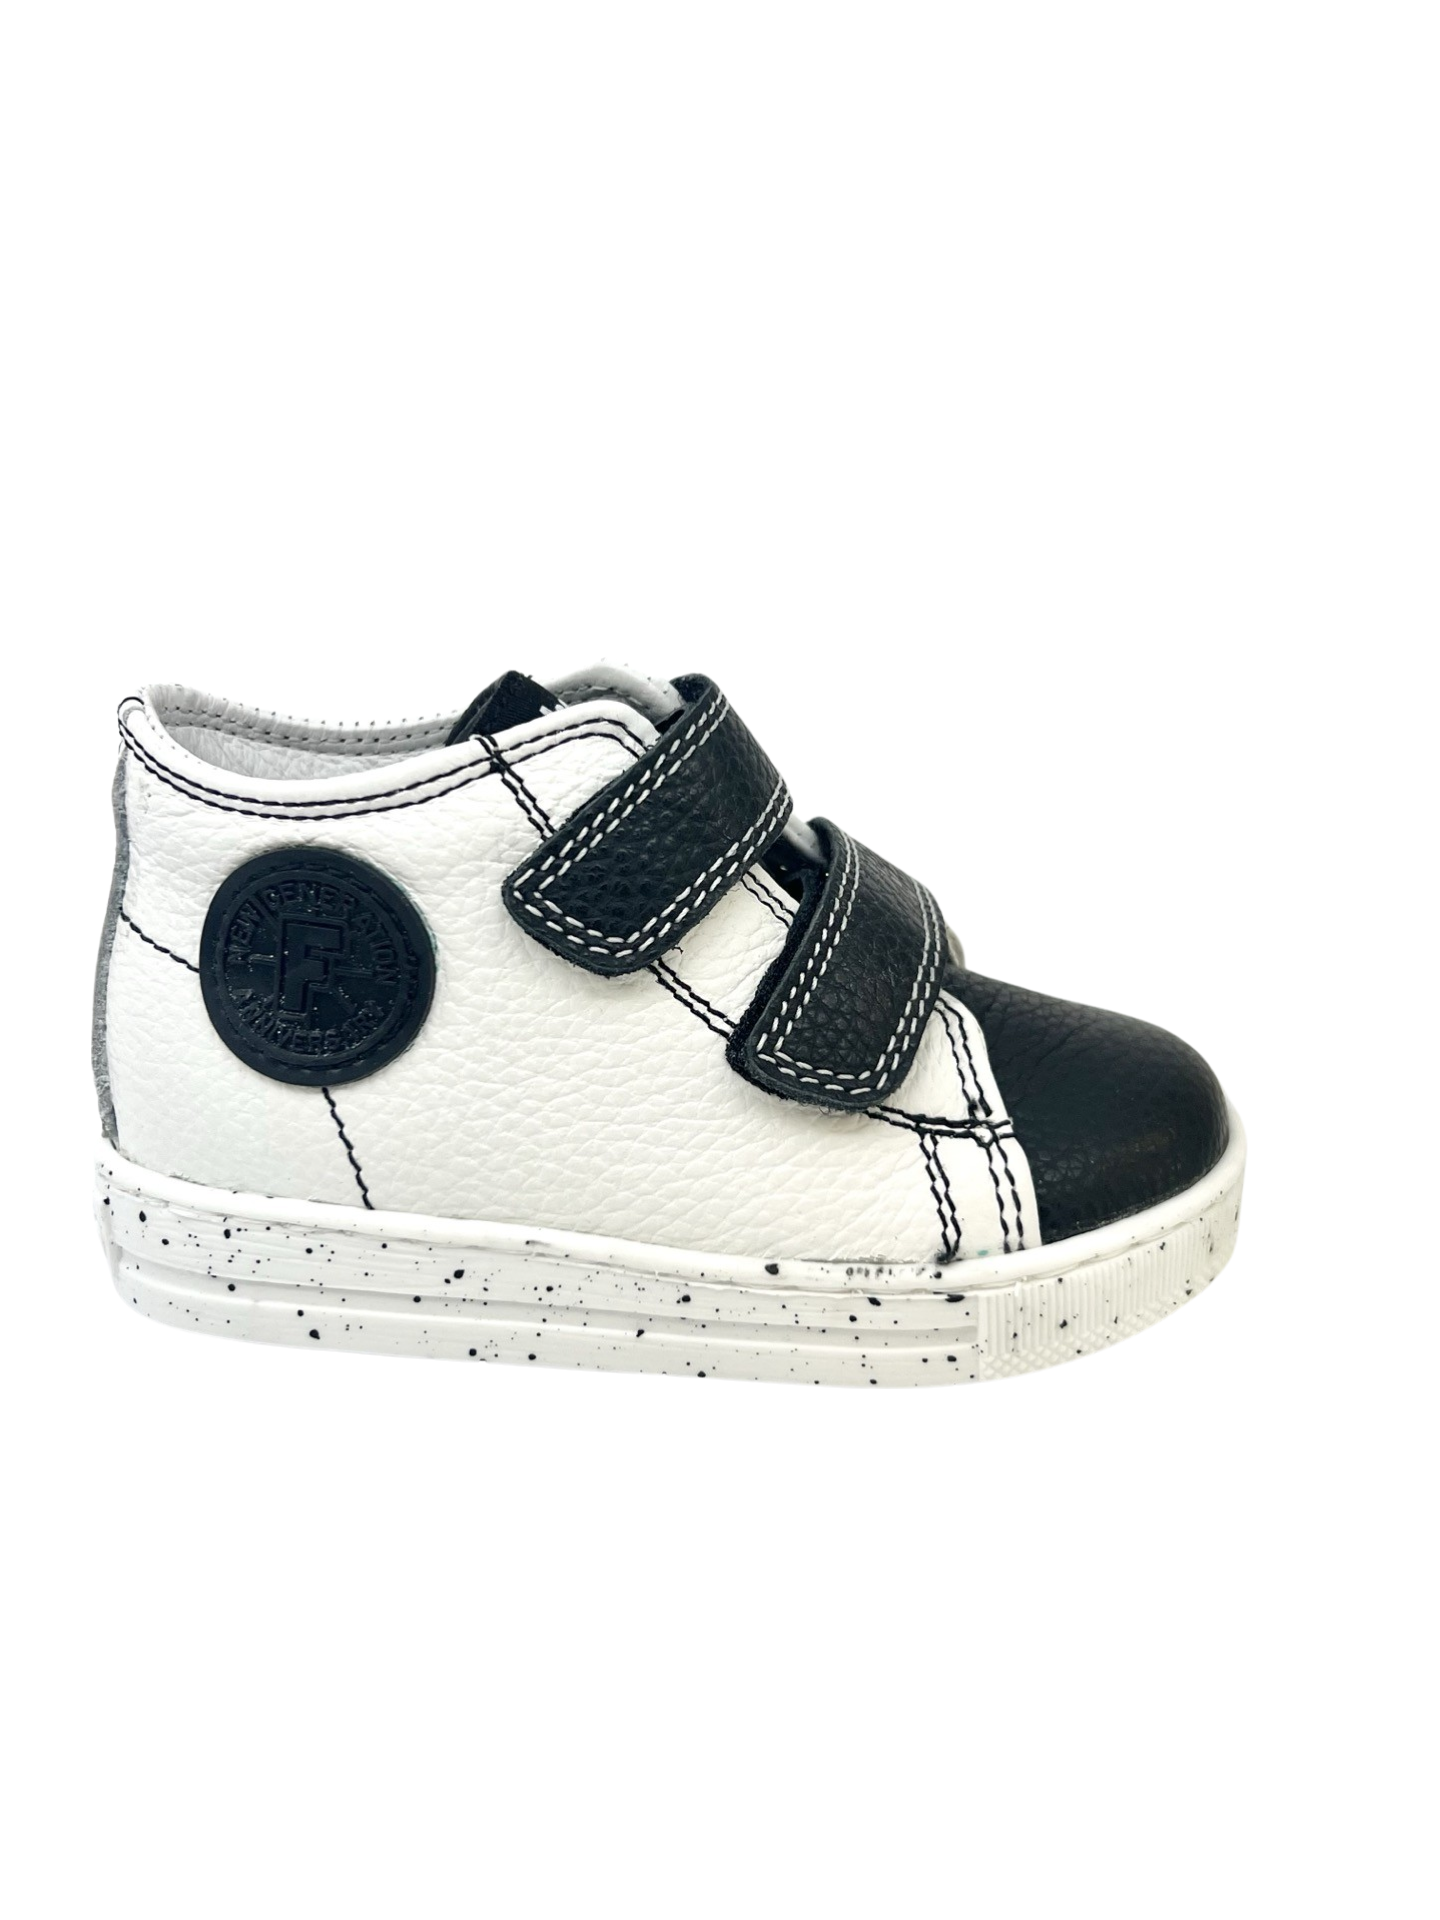 Falcotto White/Black Pebbled Baby Sneaker - Michael